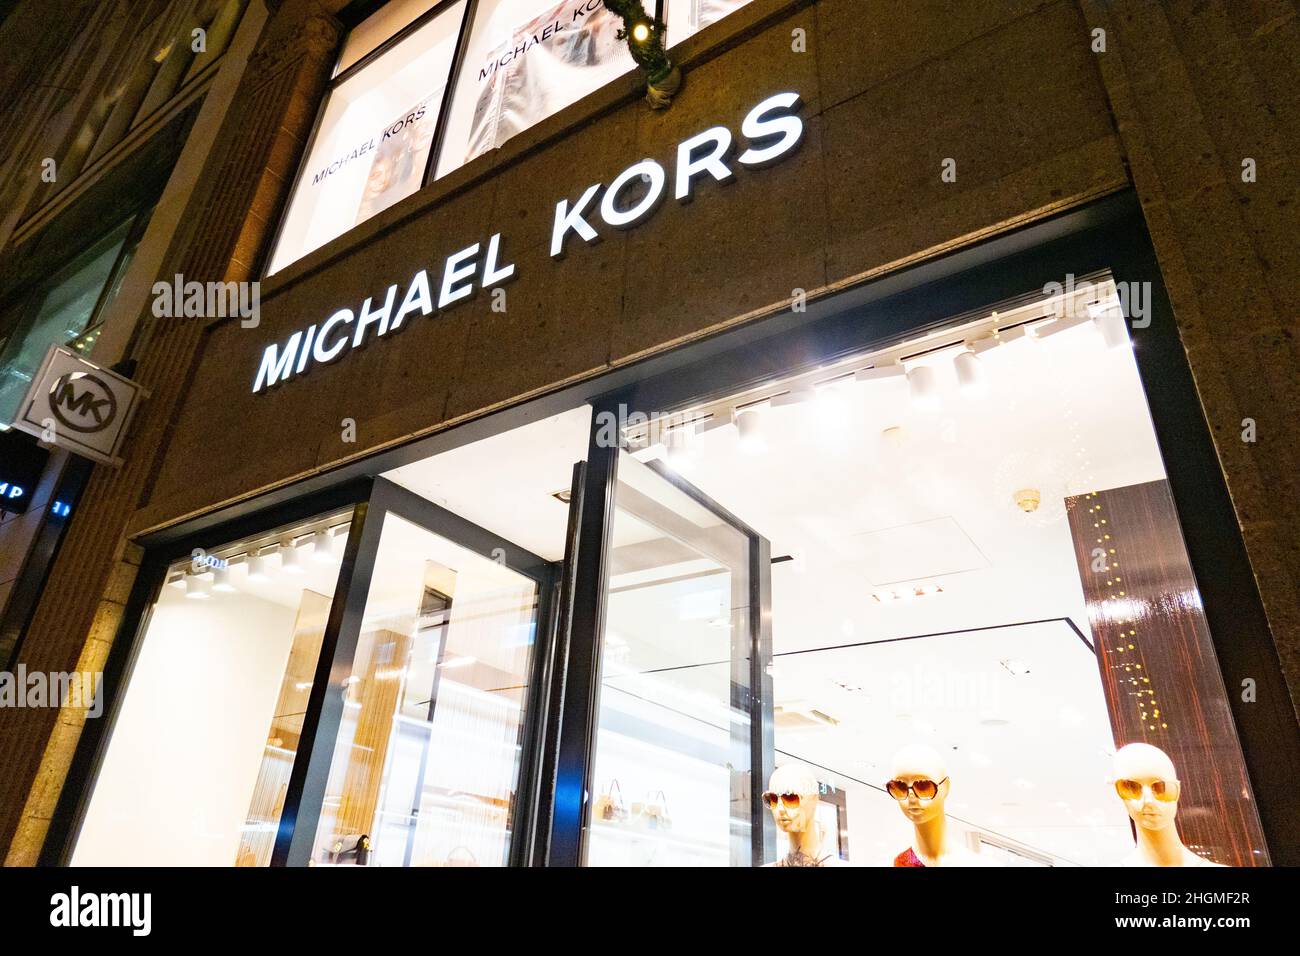 Michael Kors opens largest European flagship in London